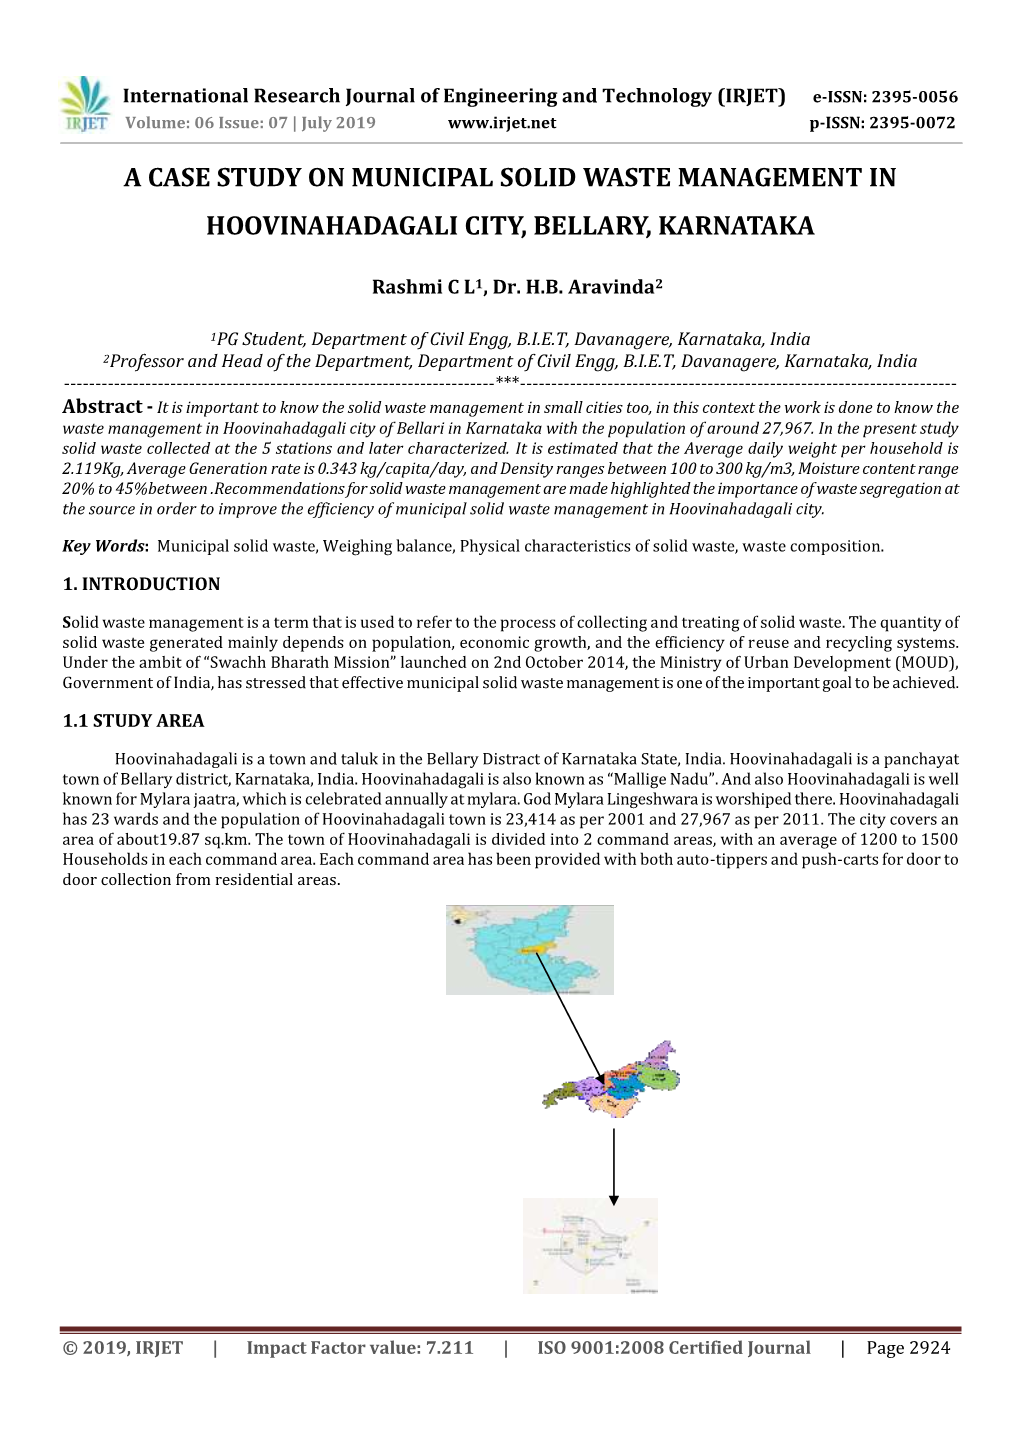 A Case Study on Municipal Solid Waste Management in Hoovinahadagali City, Bellary, Karnataka